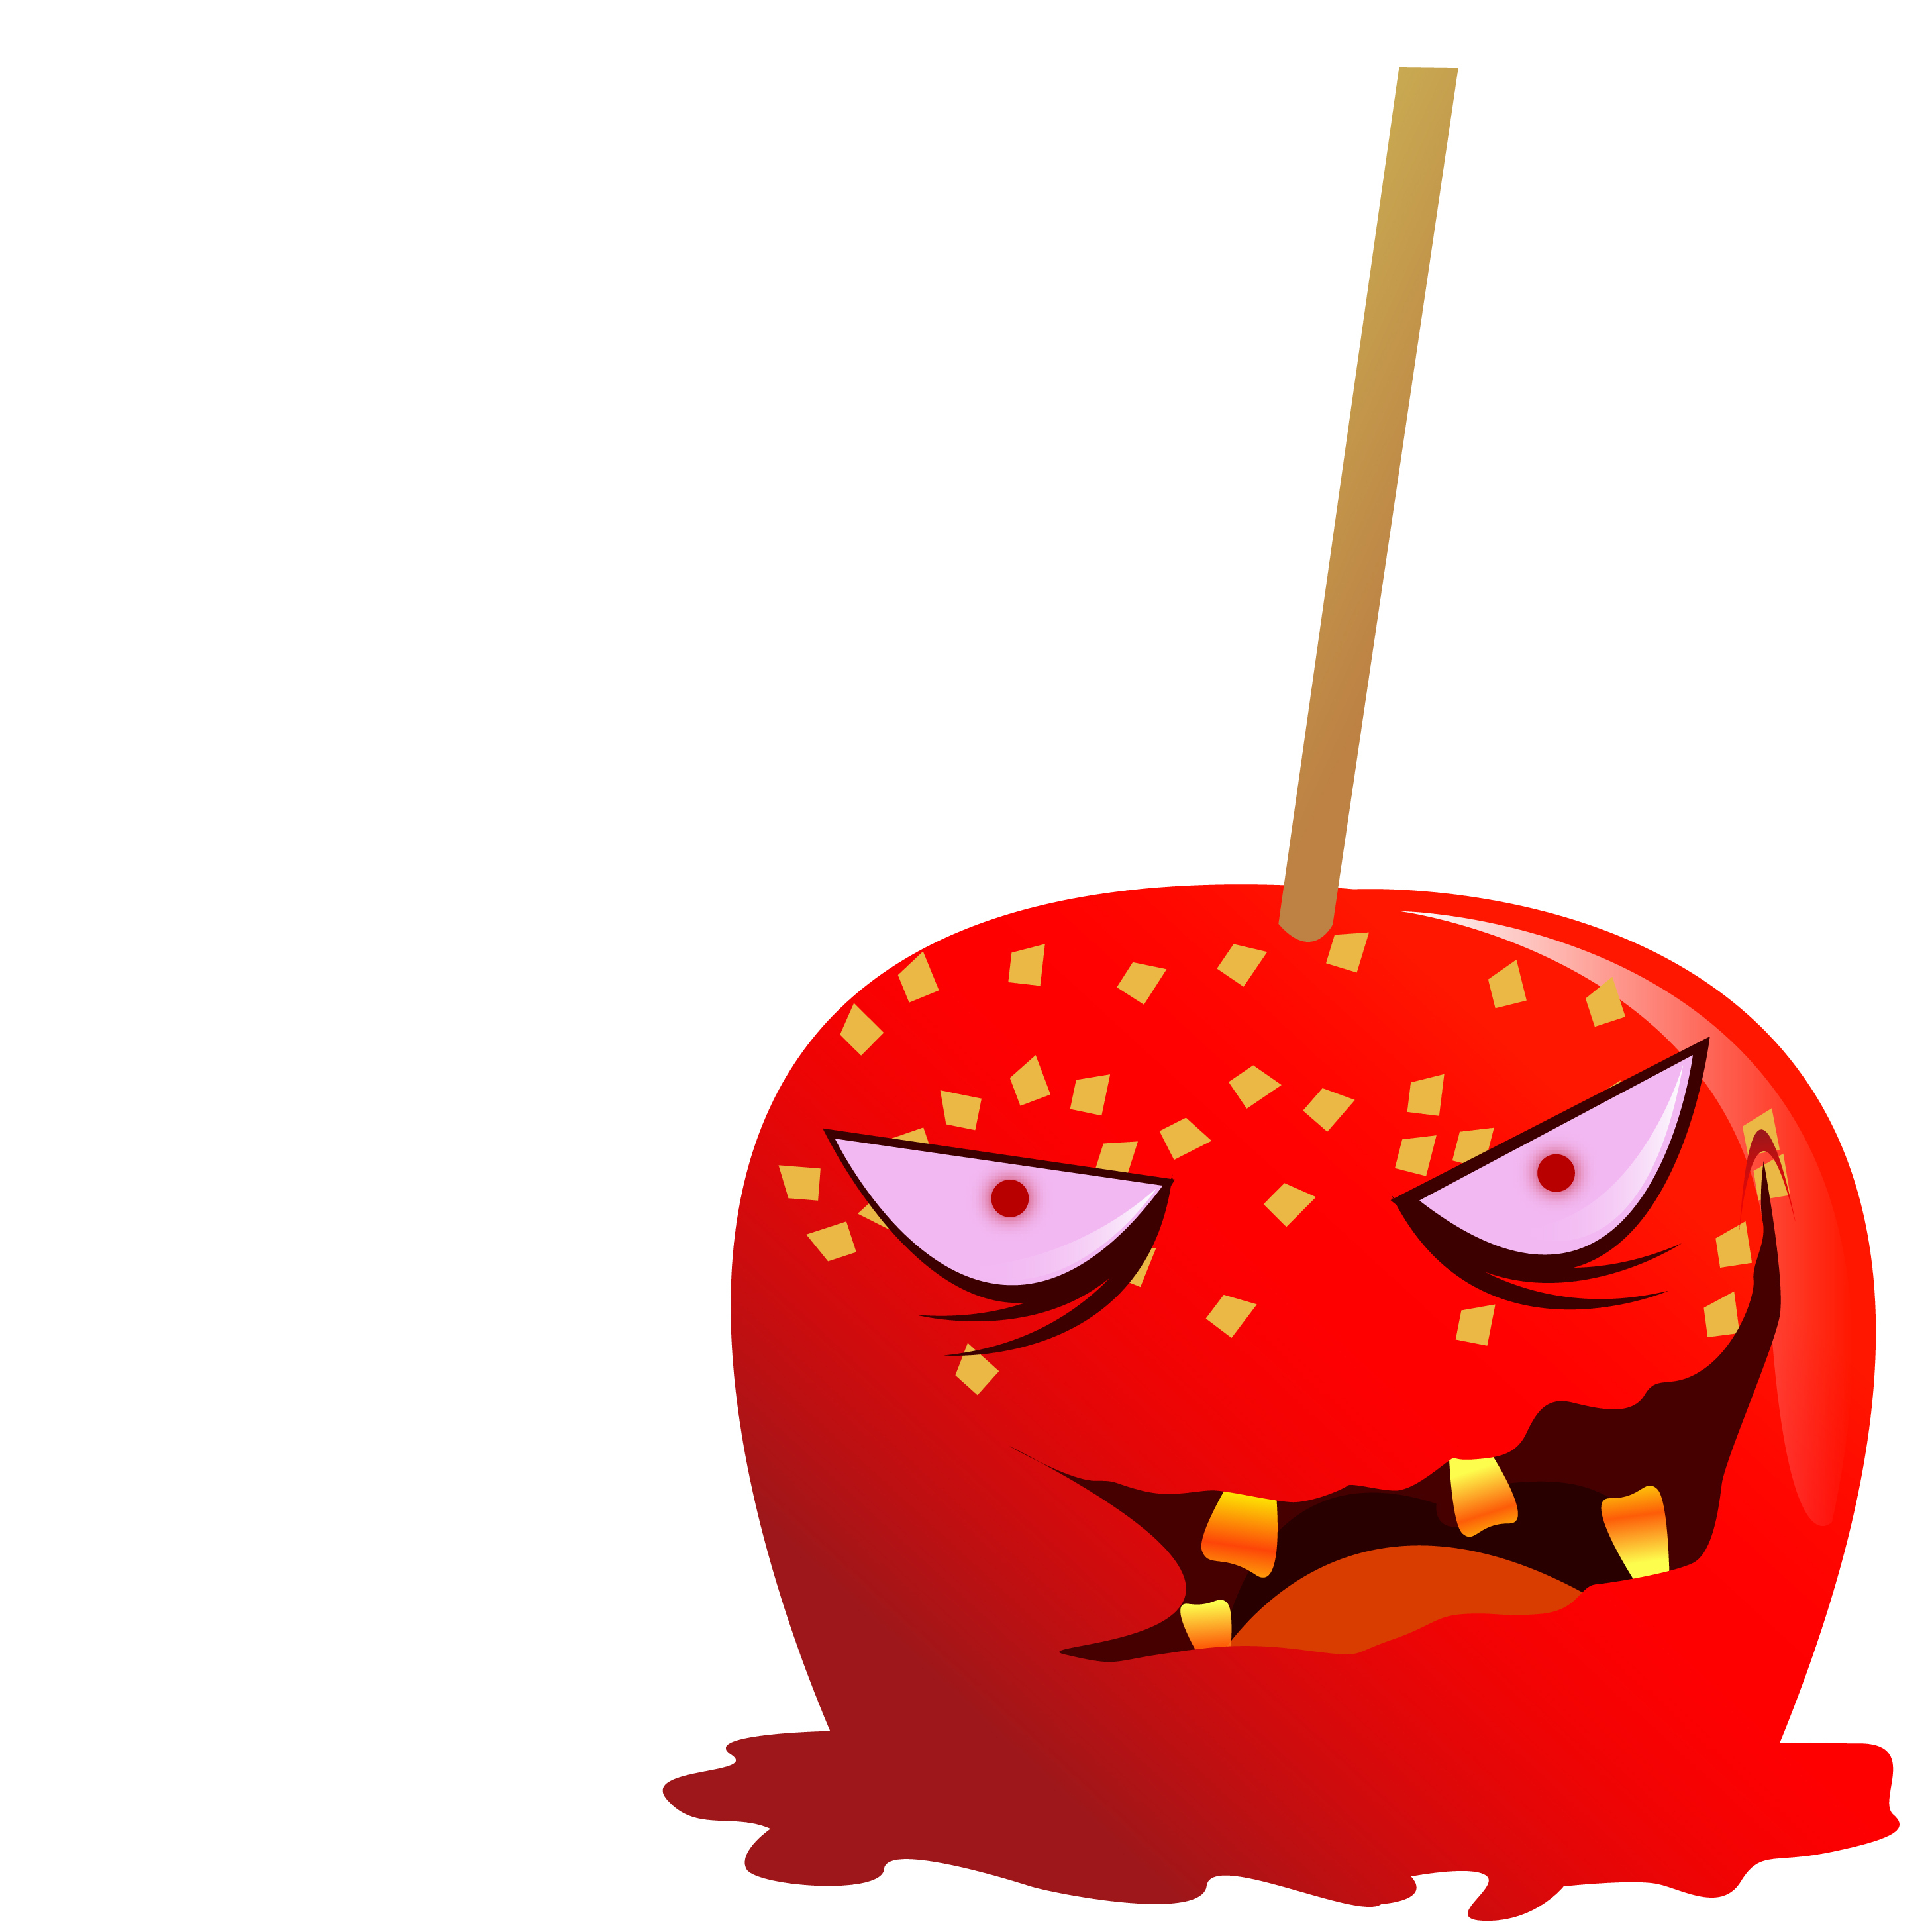 candy apple